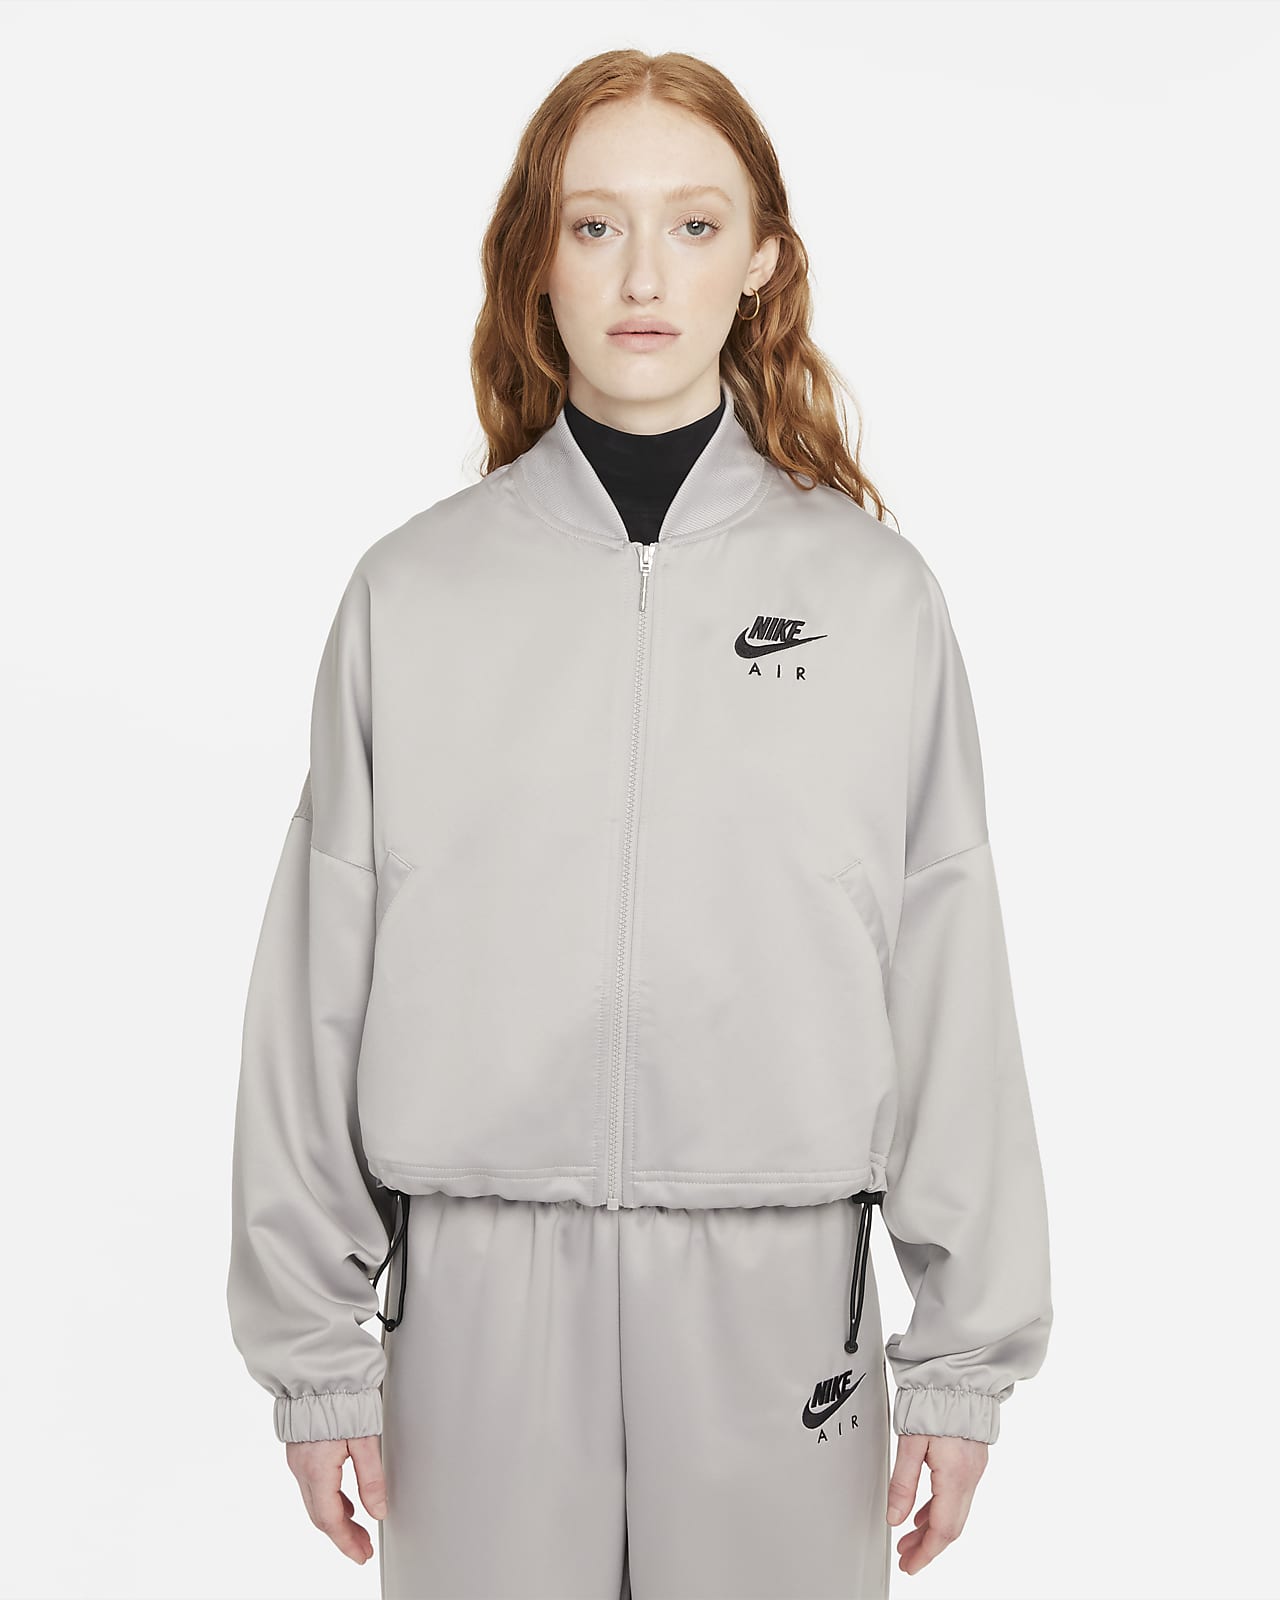 Nike Air Women's Jacket